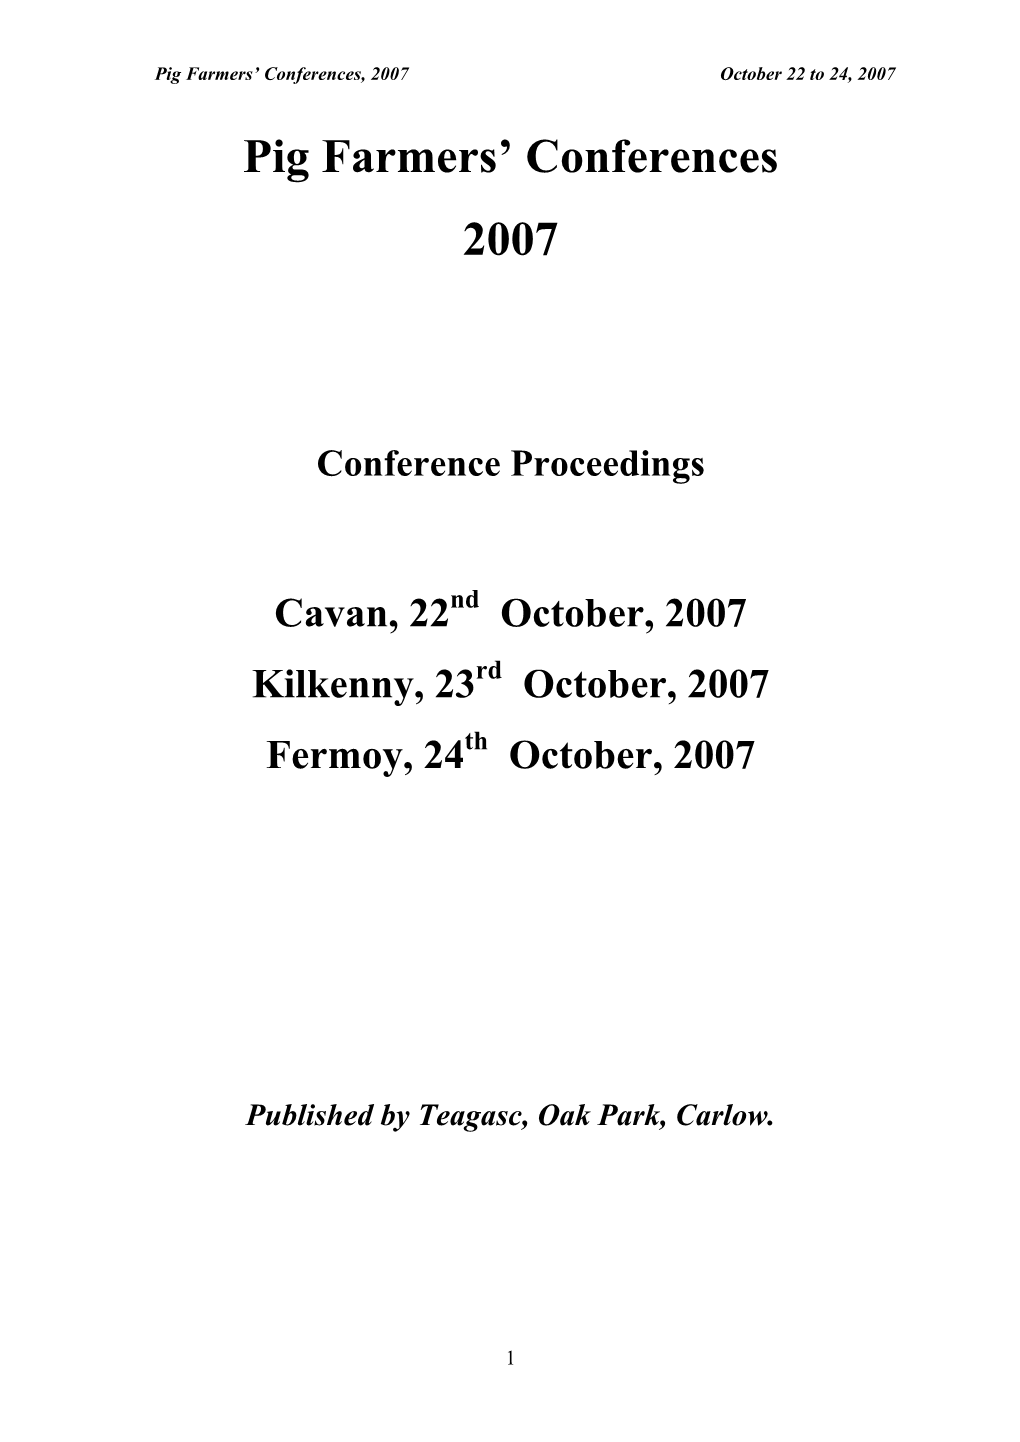 Pig Farmers' Conferences 2007